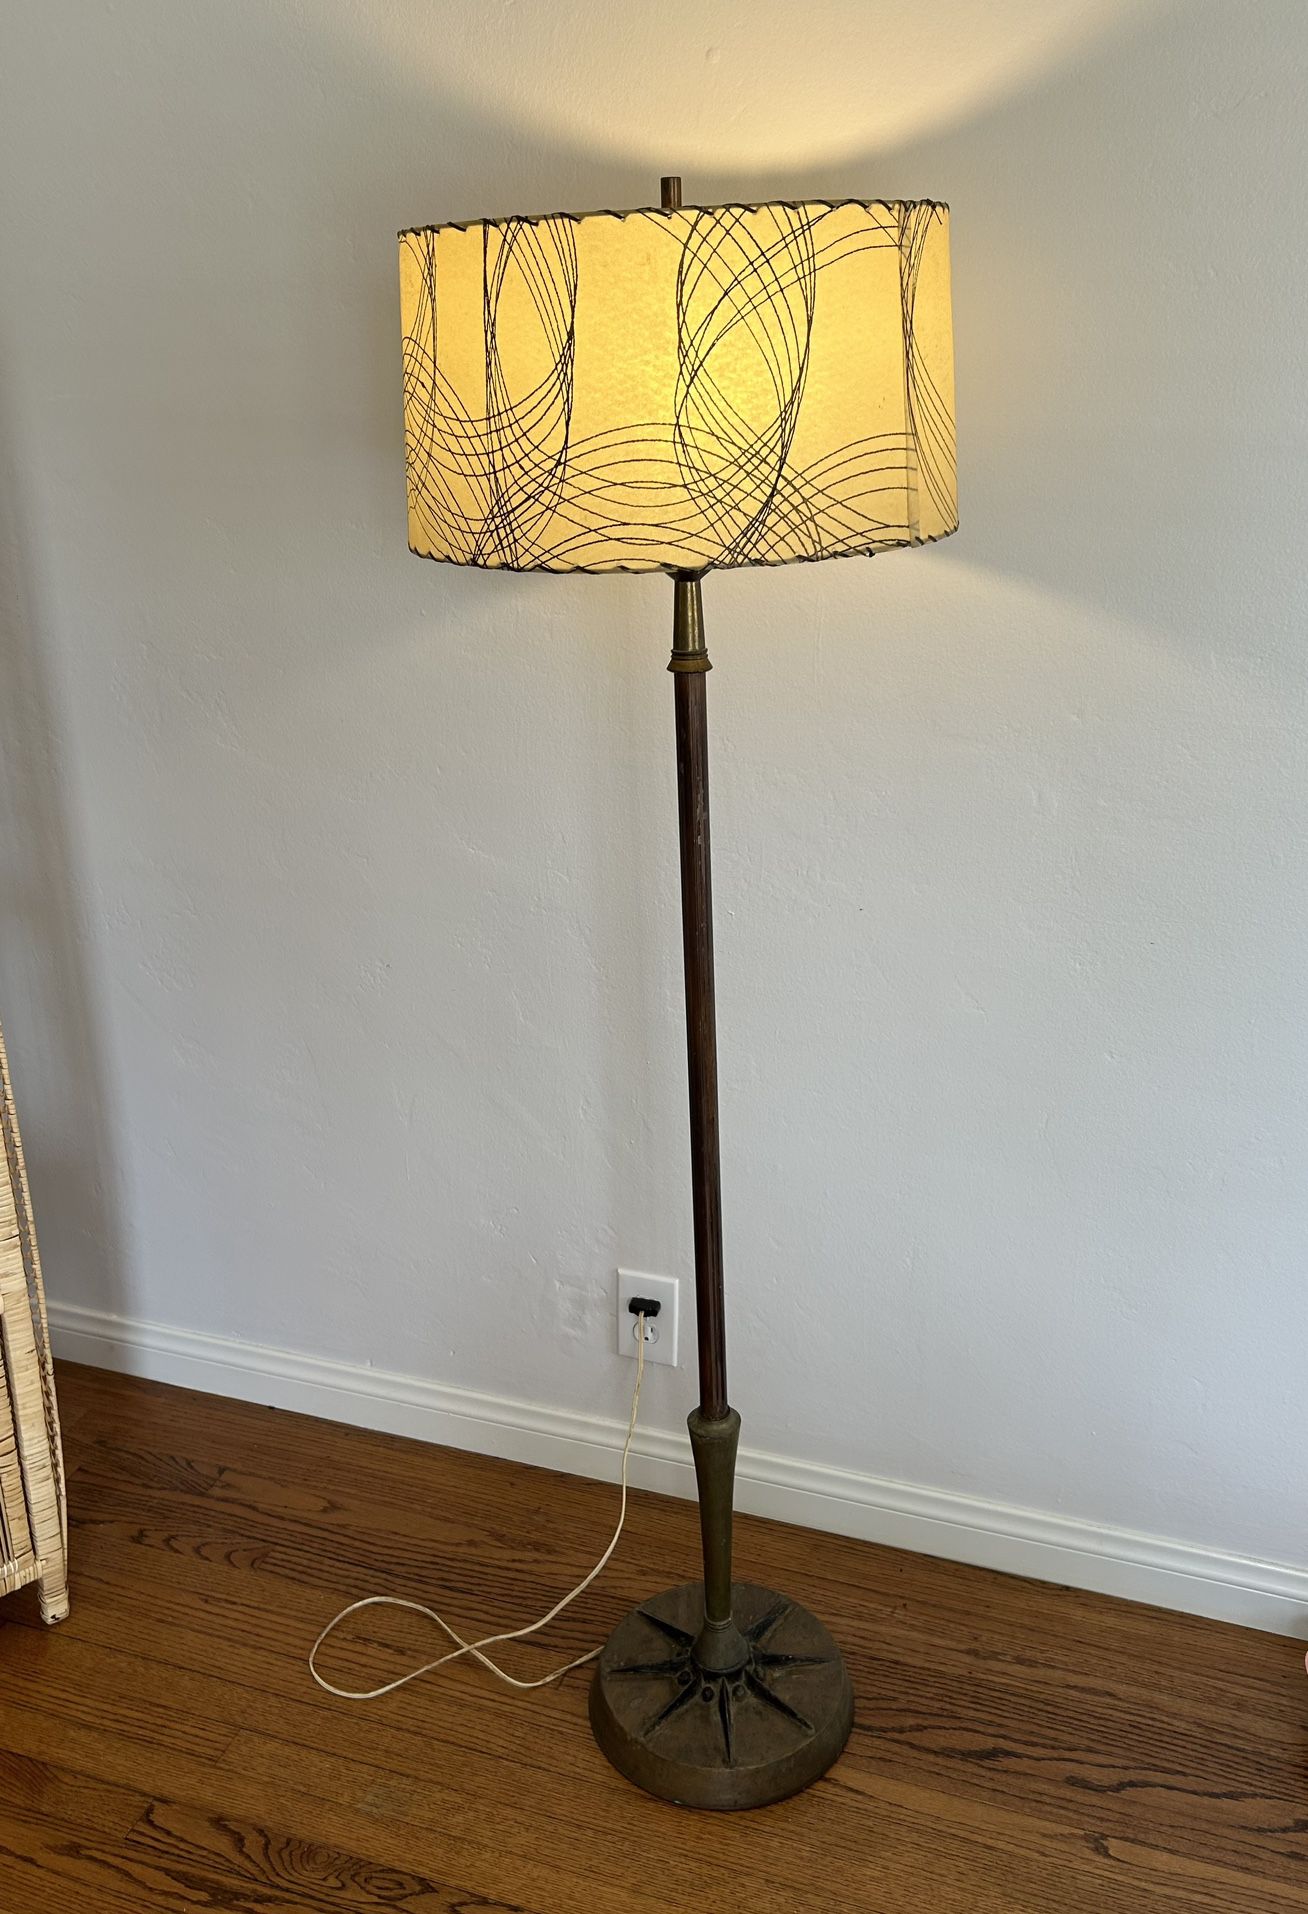 Rare Mid Century Modern Floor Lamp With Fiber Glass Shade Brass Stand Star Atomic Sunburst Art Deco Pole Vintage Antique Teak Wood Retro Light Lamp 